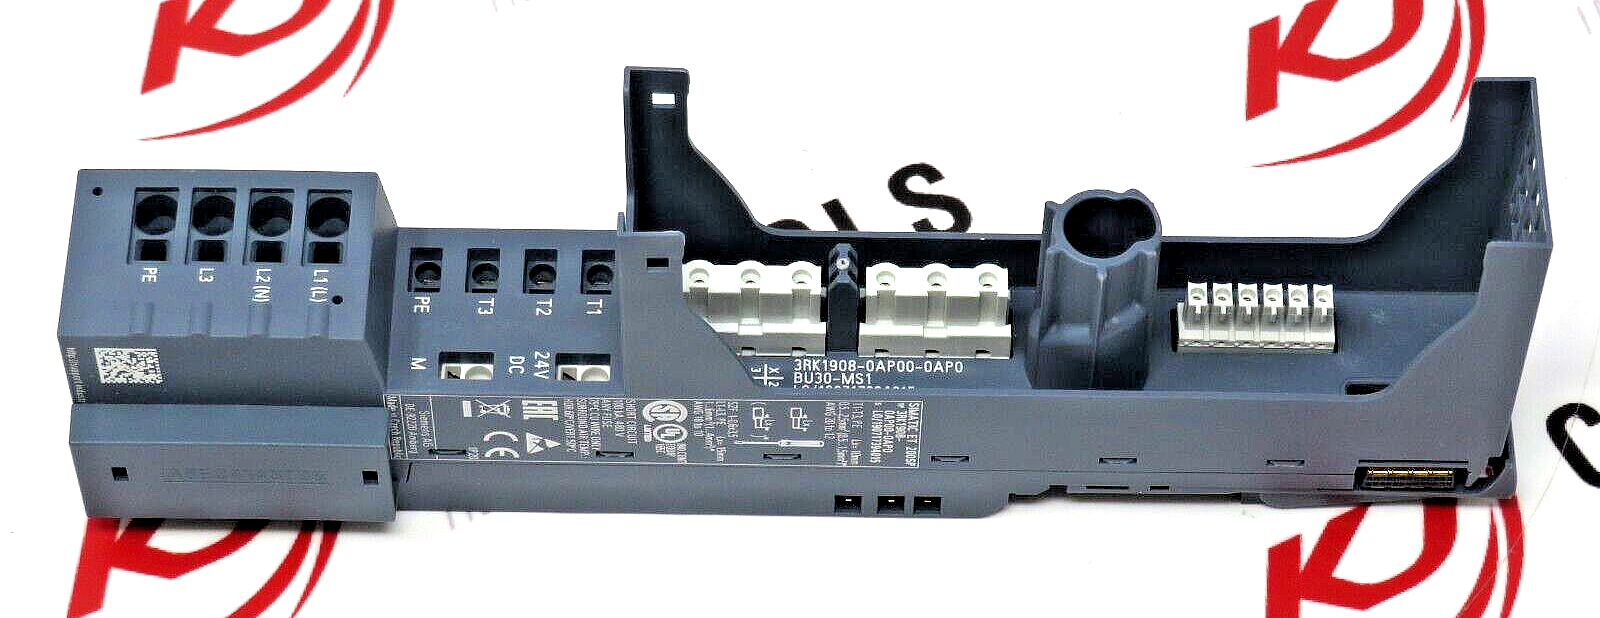 Siemens 3RK1908-0AP00-0AP0 Base Unit For ET 200SP Motor Starter